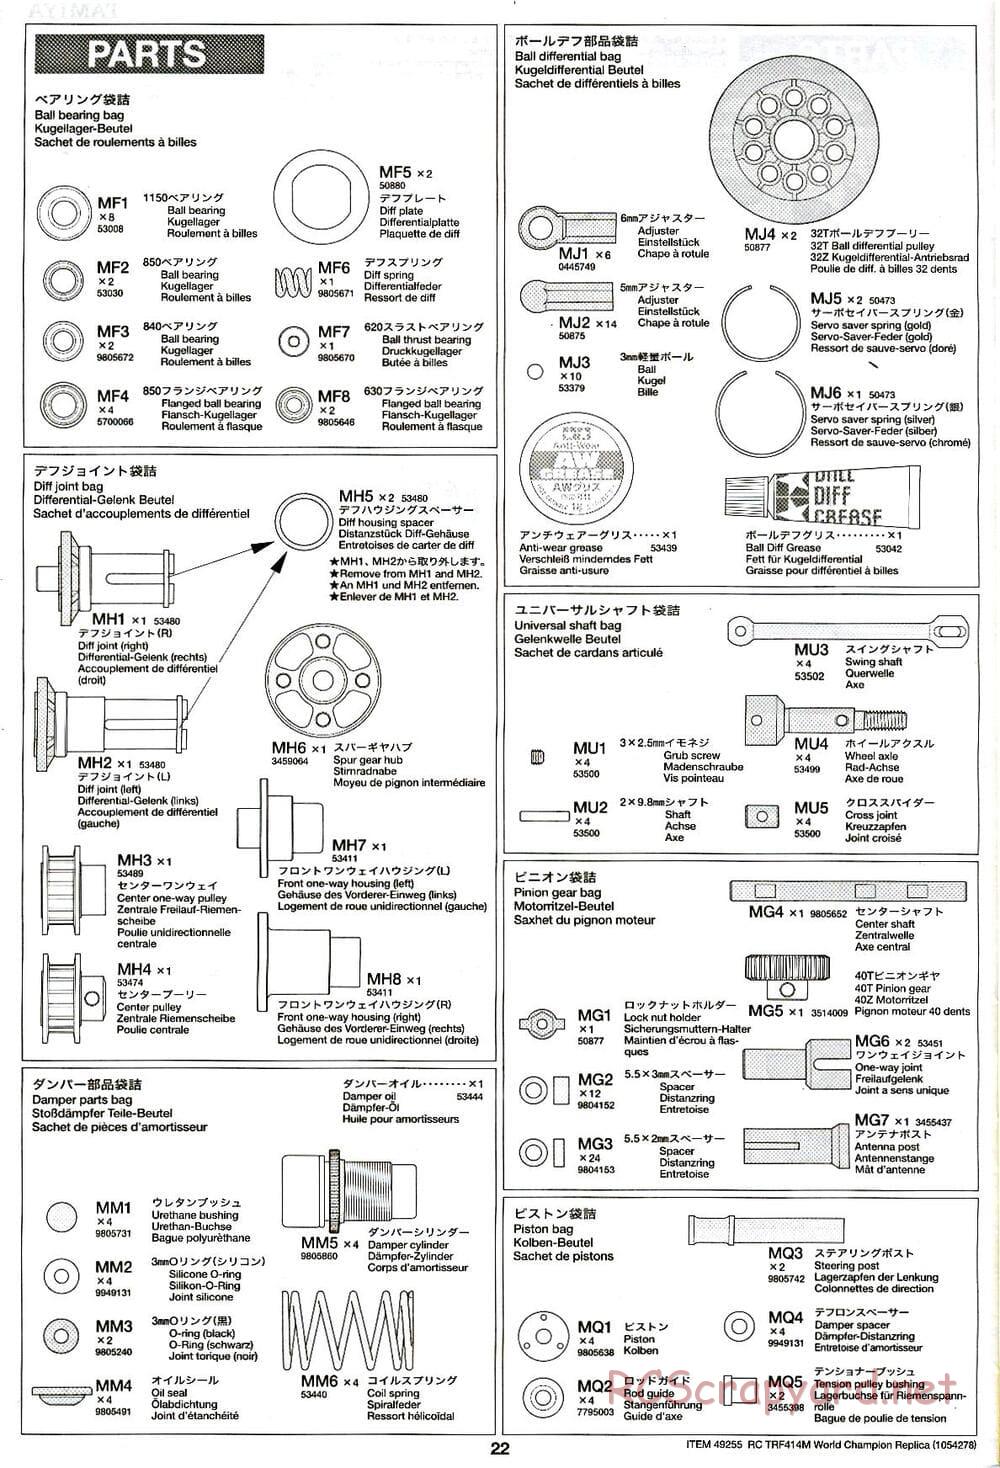 Tamiya - TRF414M World Champion Replica Chassis - Manual - Page 22